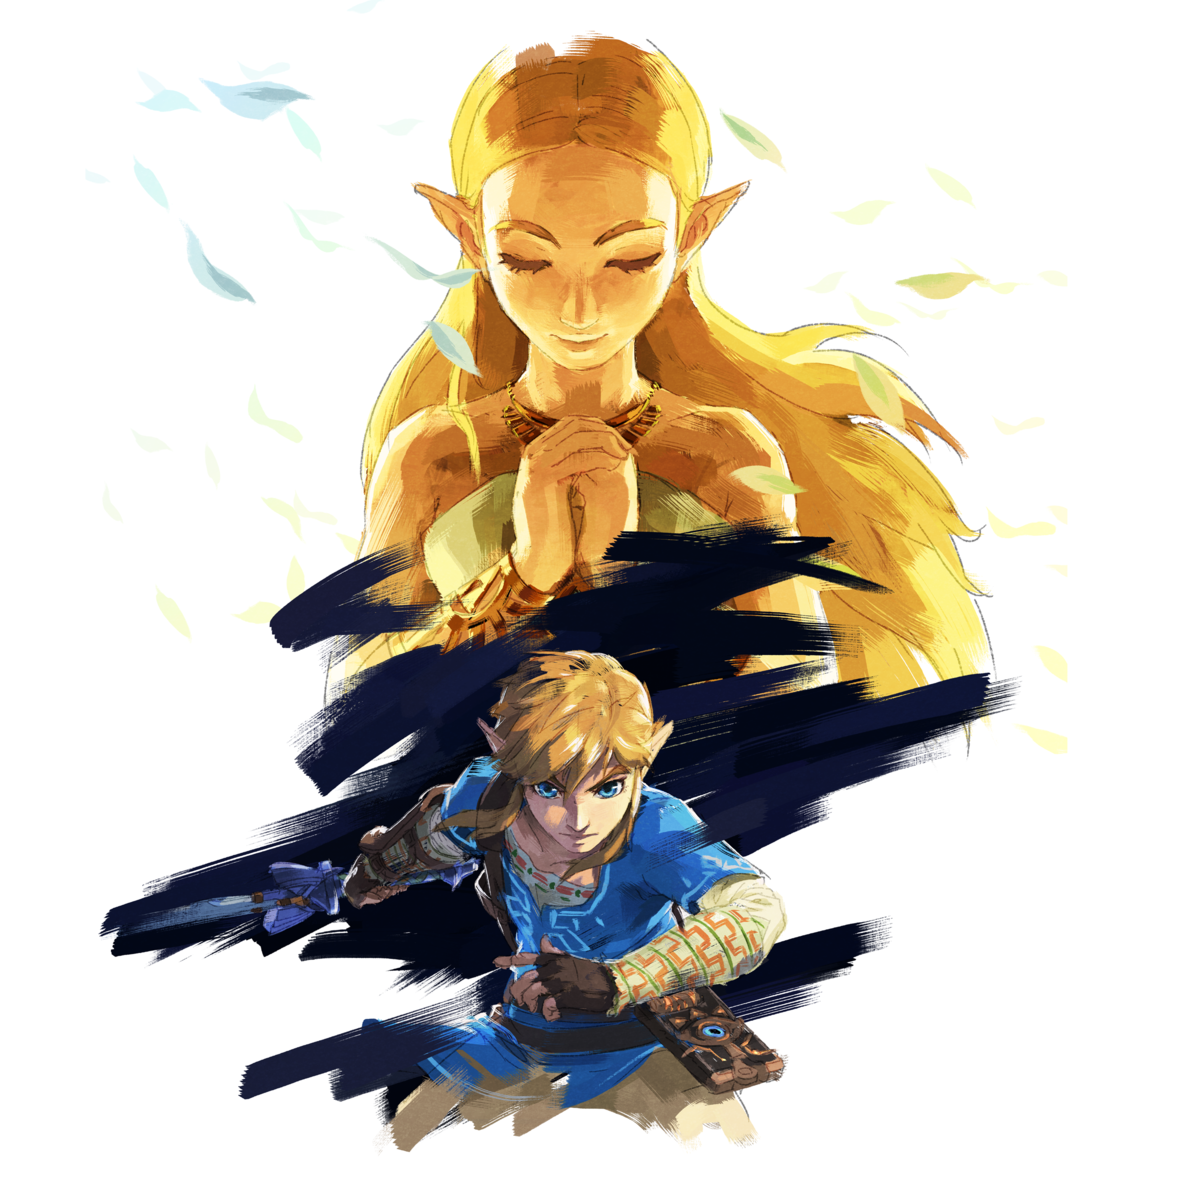 Princess Zelda and Link from 'The Legend of Zelda: Breath of the WIld' artwork